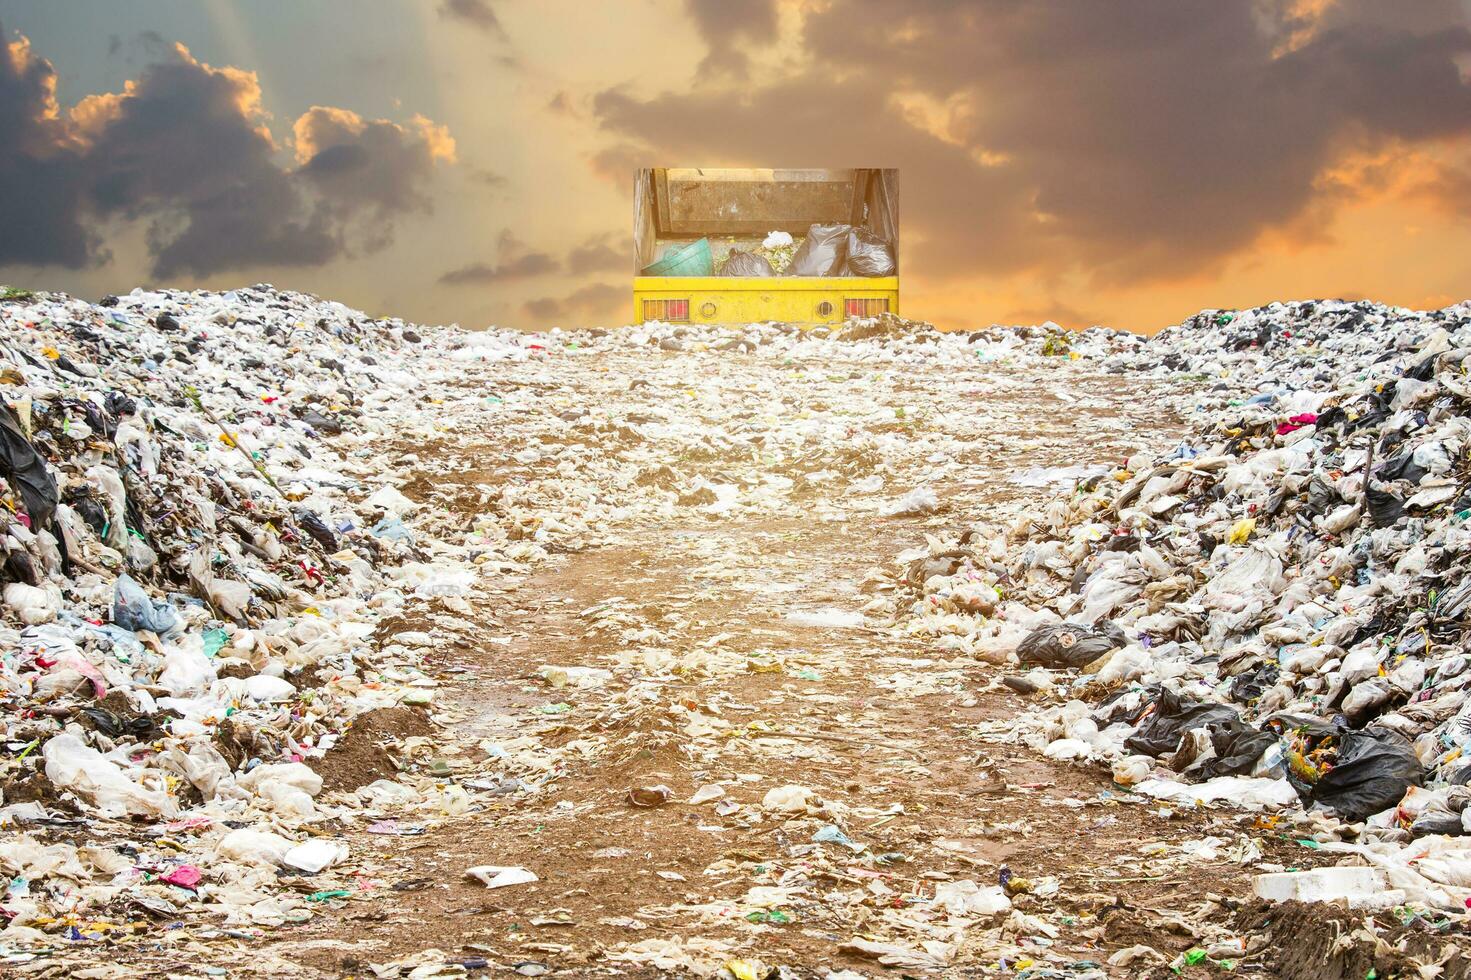 basura tugurio pila en basura tugurio o vertedero, camión es dumping el basura desde municipal,contaminación concepto foto